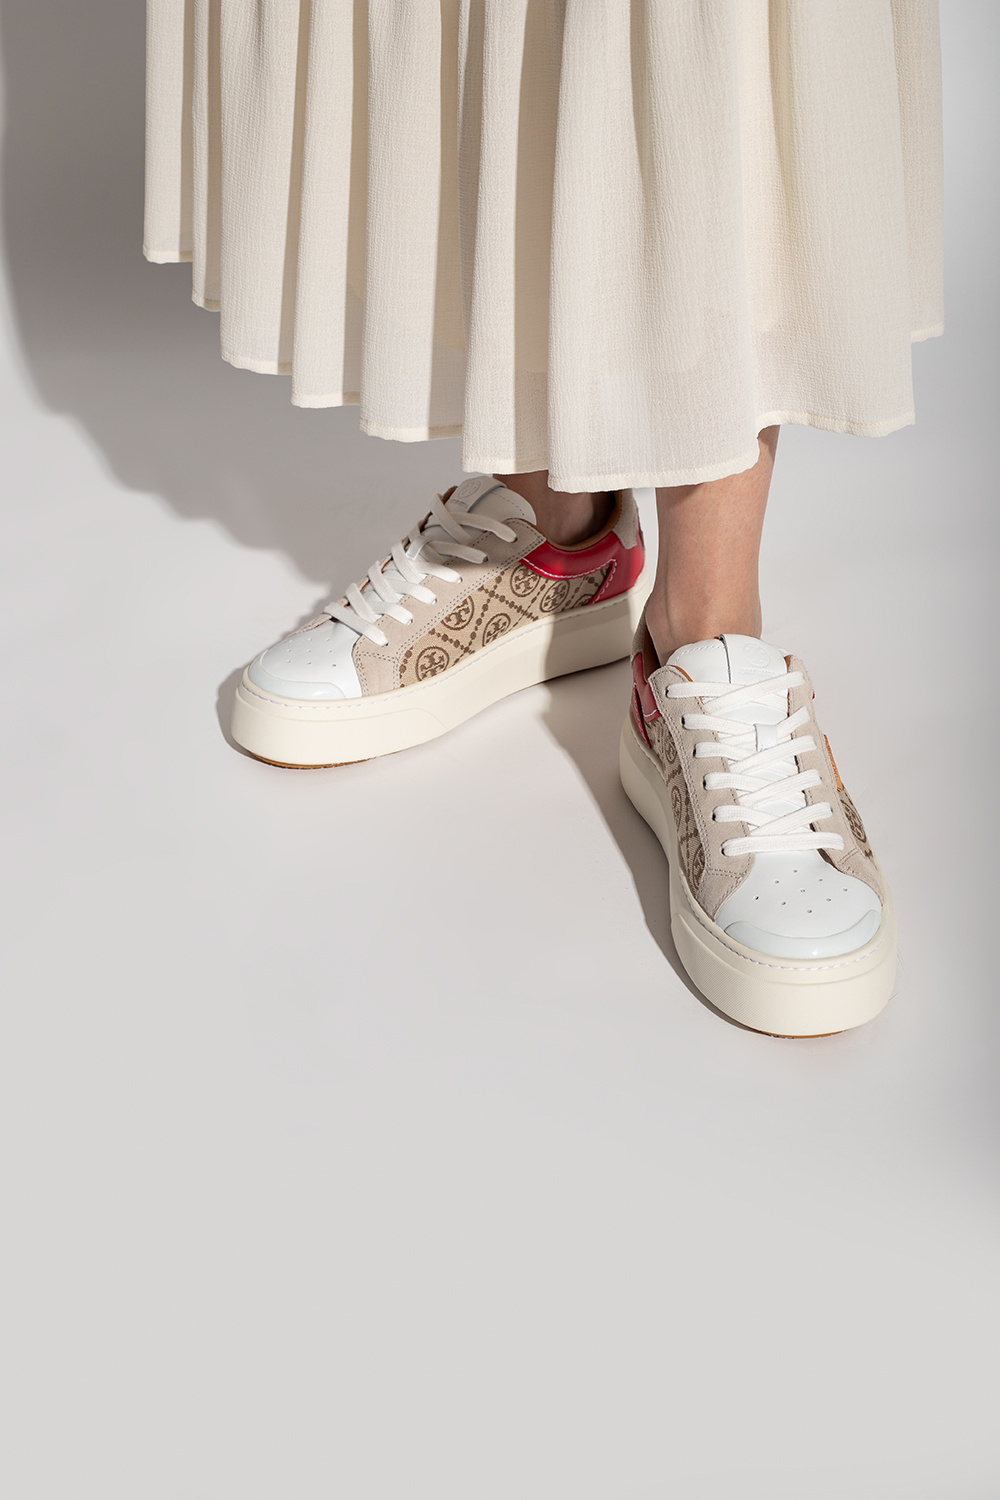 Tory Burch 'Ladybug' sneakers | Women's Shoes | Vitkac